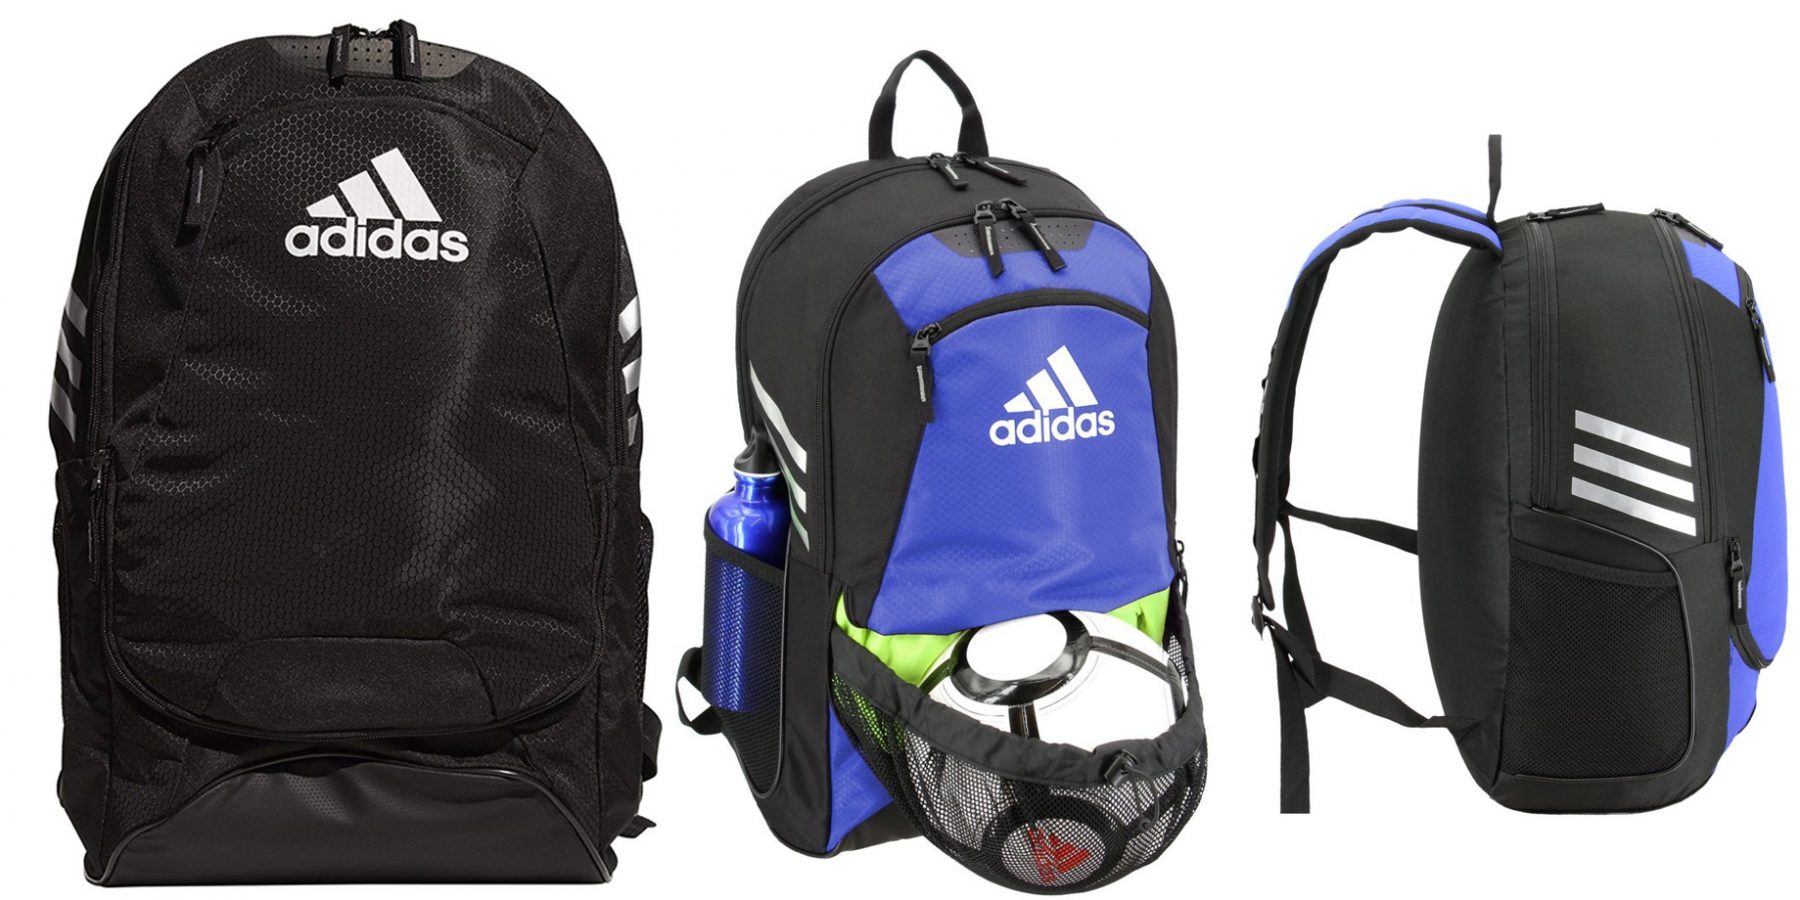 adidas stadium ii backpack review